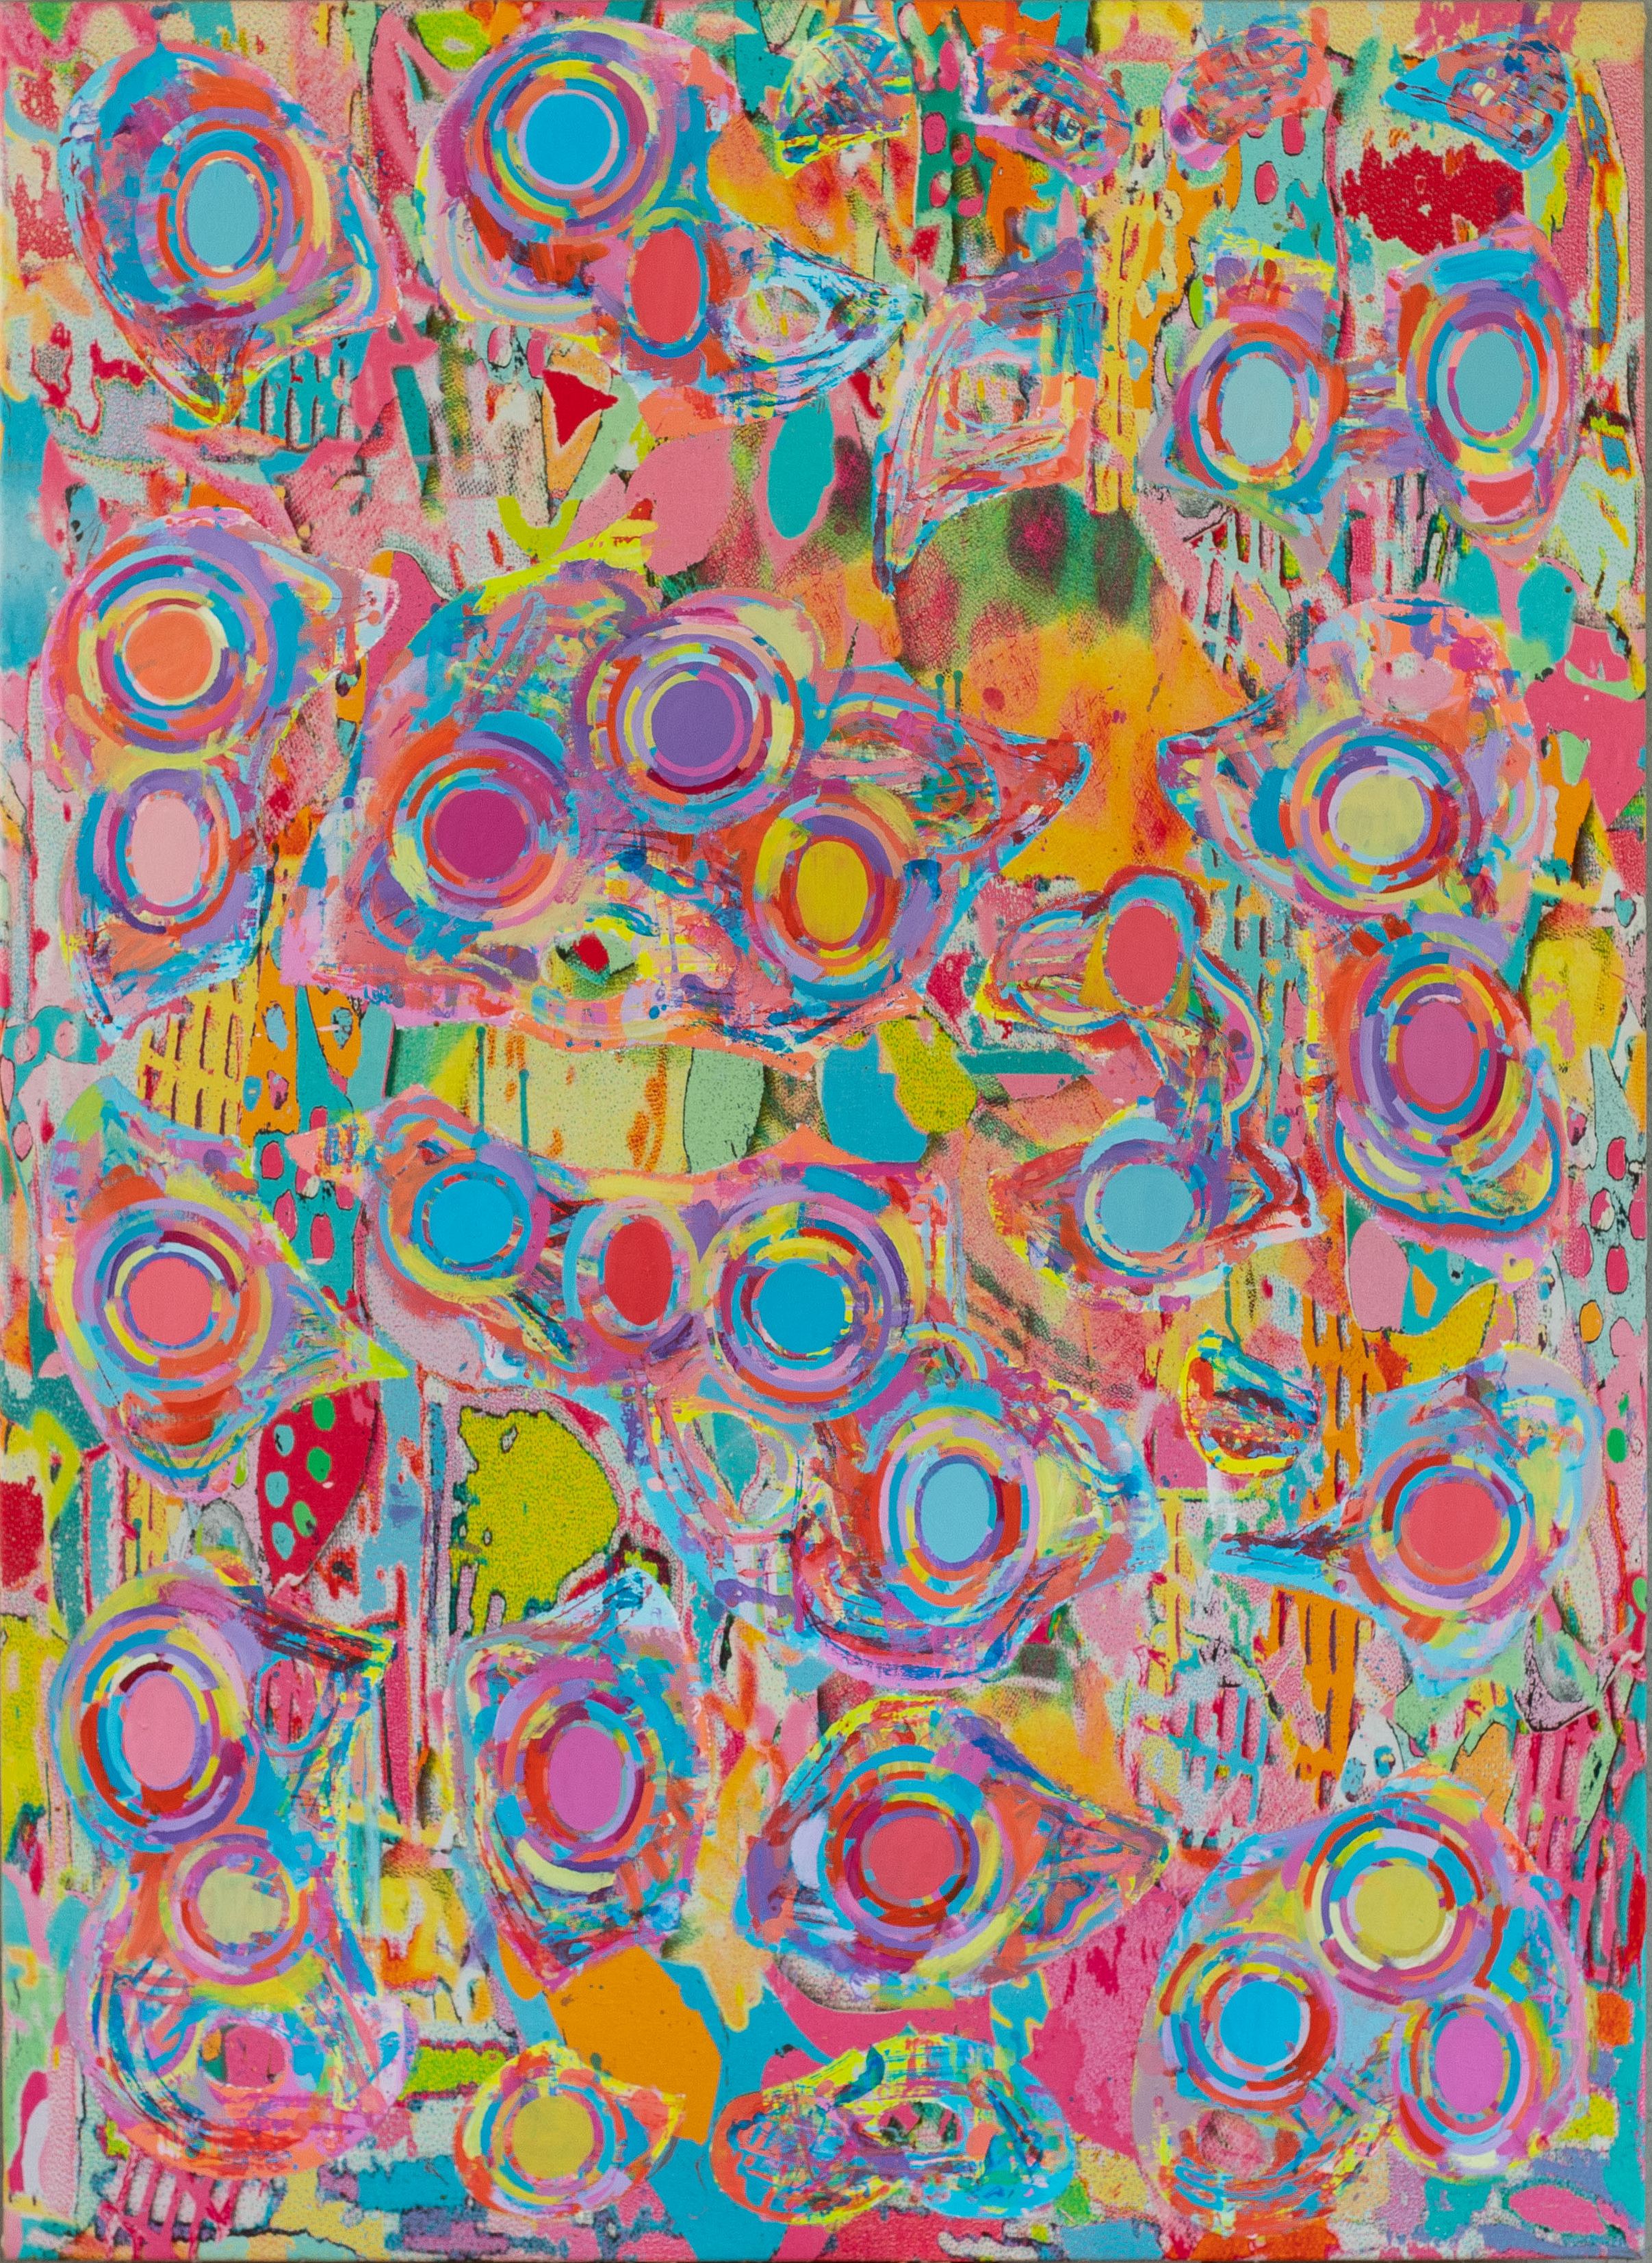 Garth Lewis, (b.1945), Svitato, 2006-08, acrylic paint on printed canvas, 158 x 114 cm